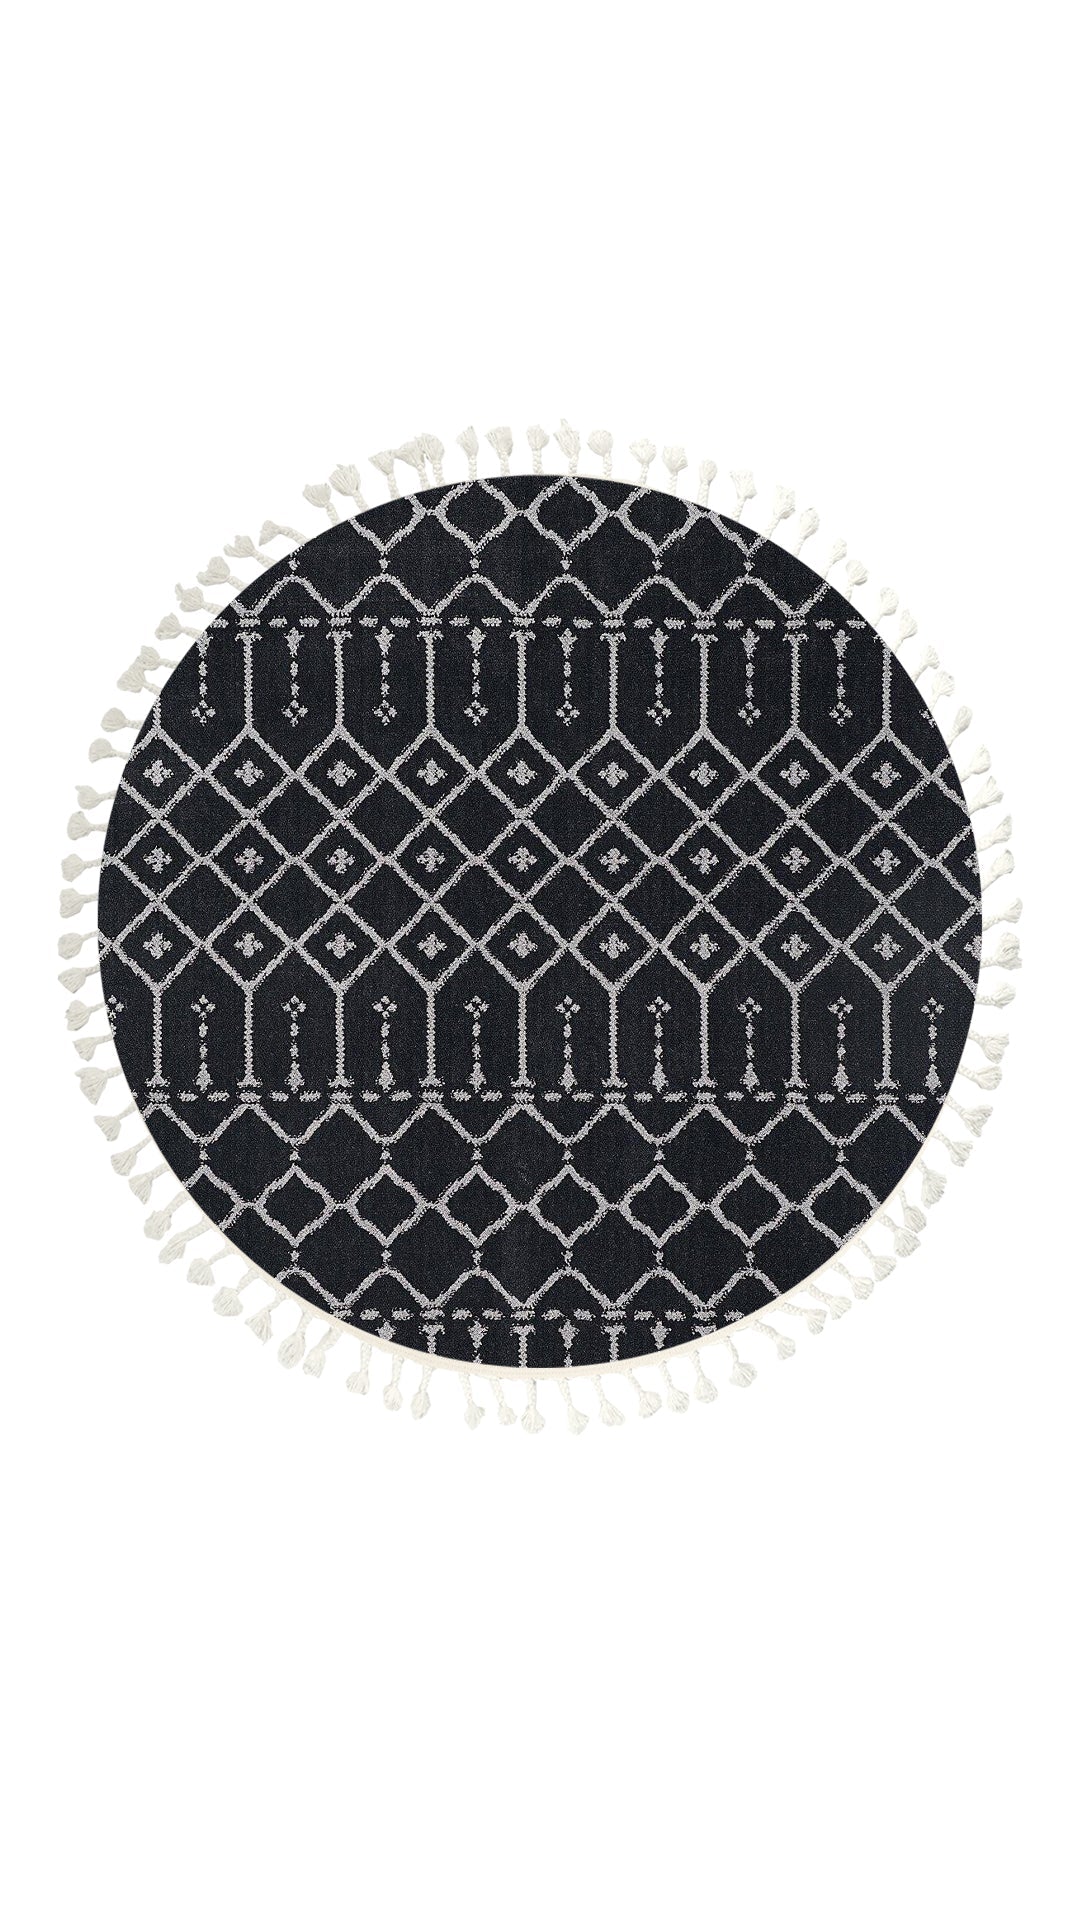 Dolce Vita Rug İskandinav 983A Black Round Scandinavian Carpet